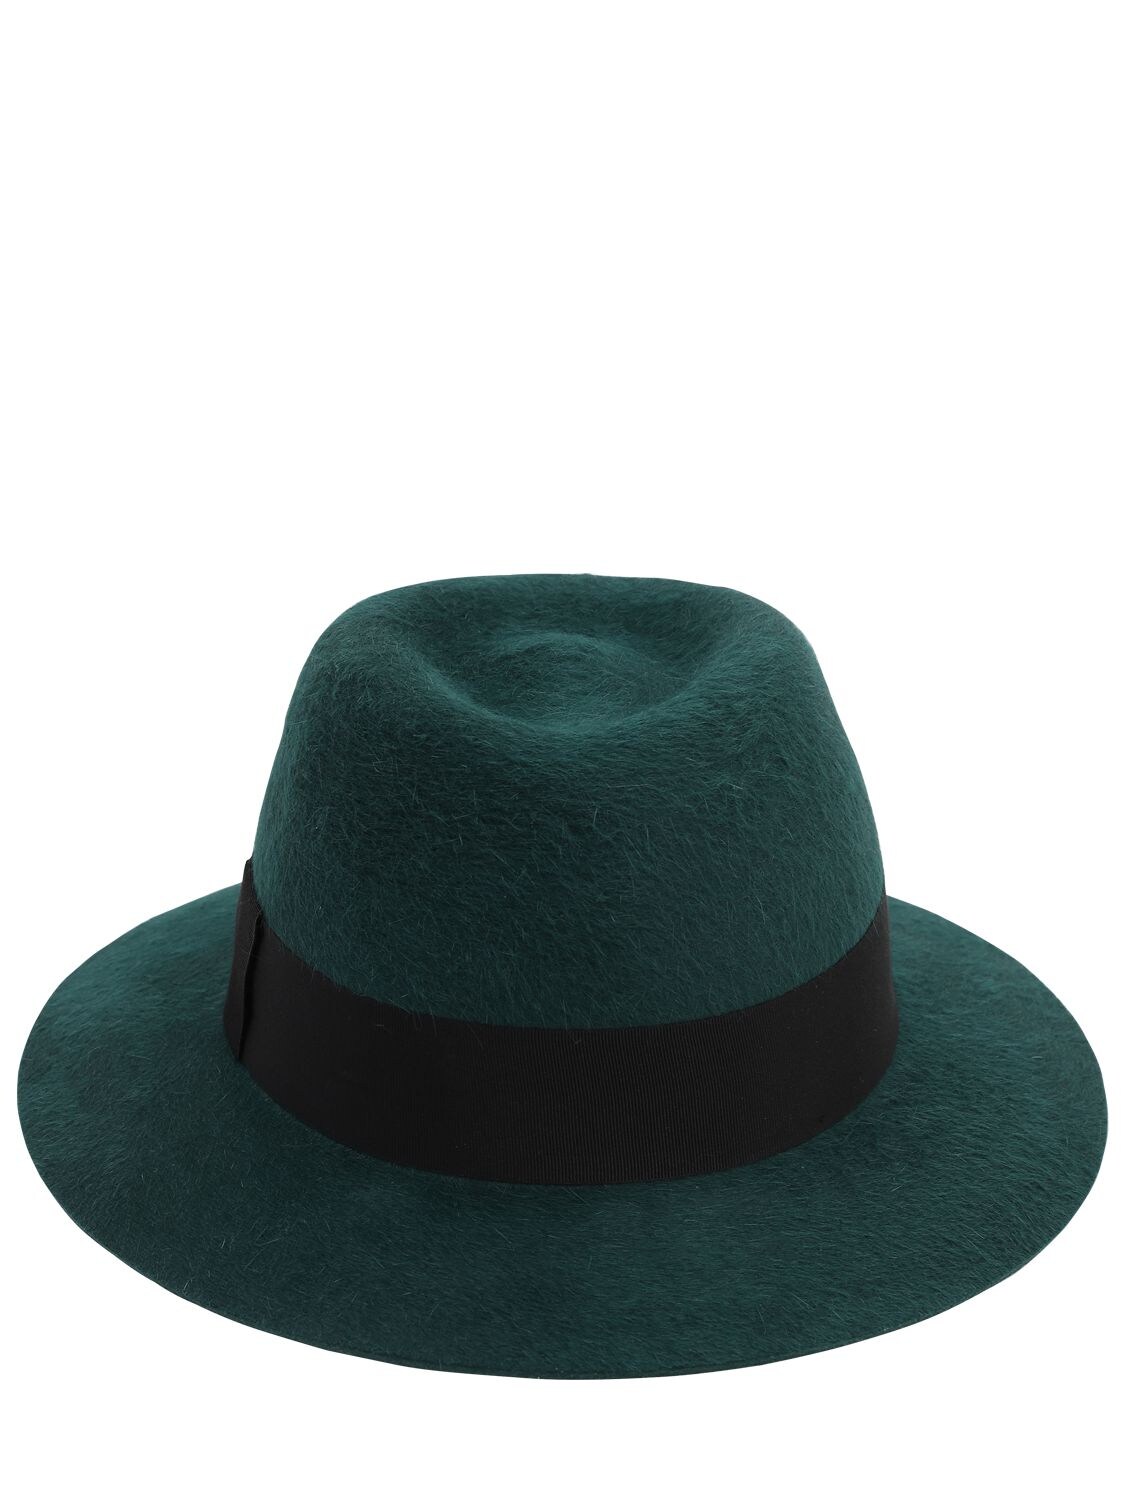 Saint Laurent Chapo Fedora Felted Lapin Hat In Dark Green